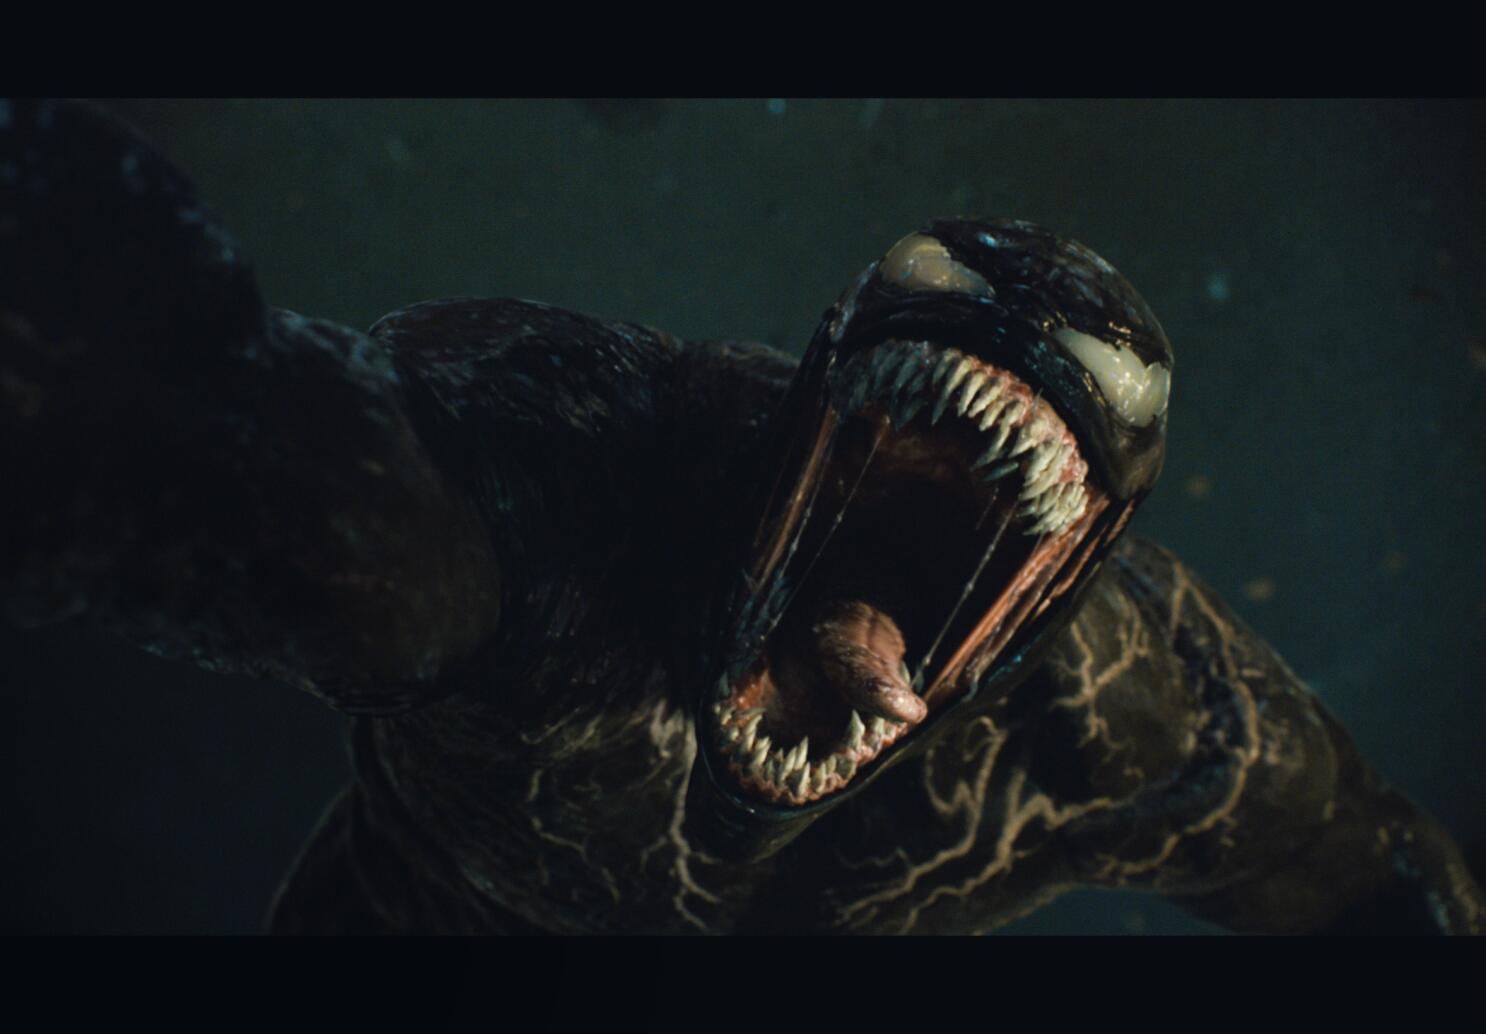 Marvel's Spider-Man 2' had to avoid making Venom too scary